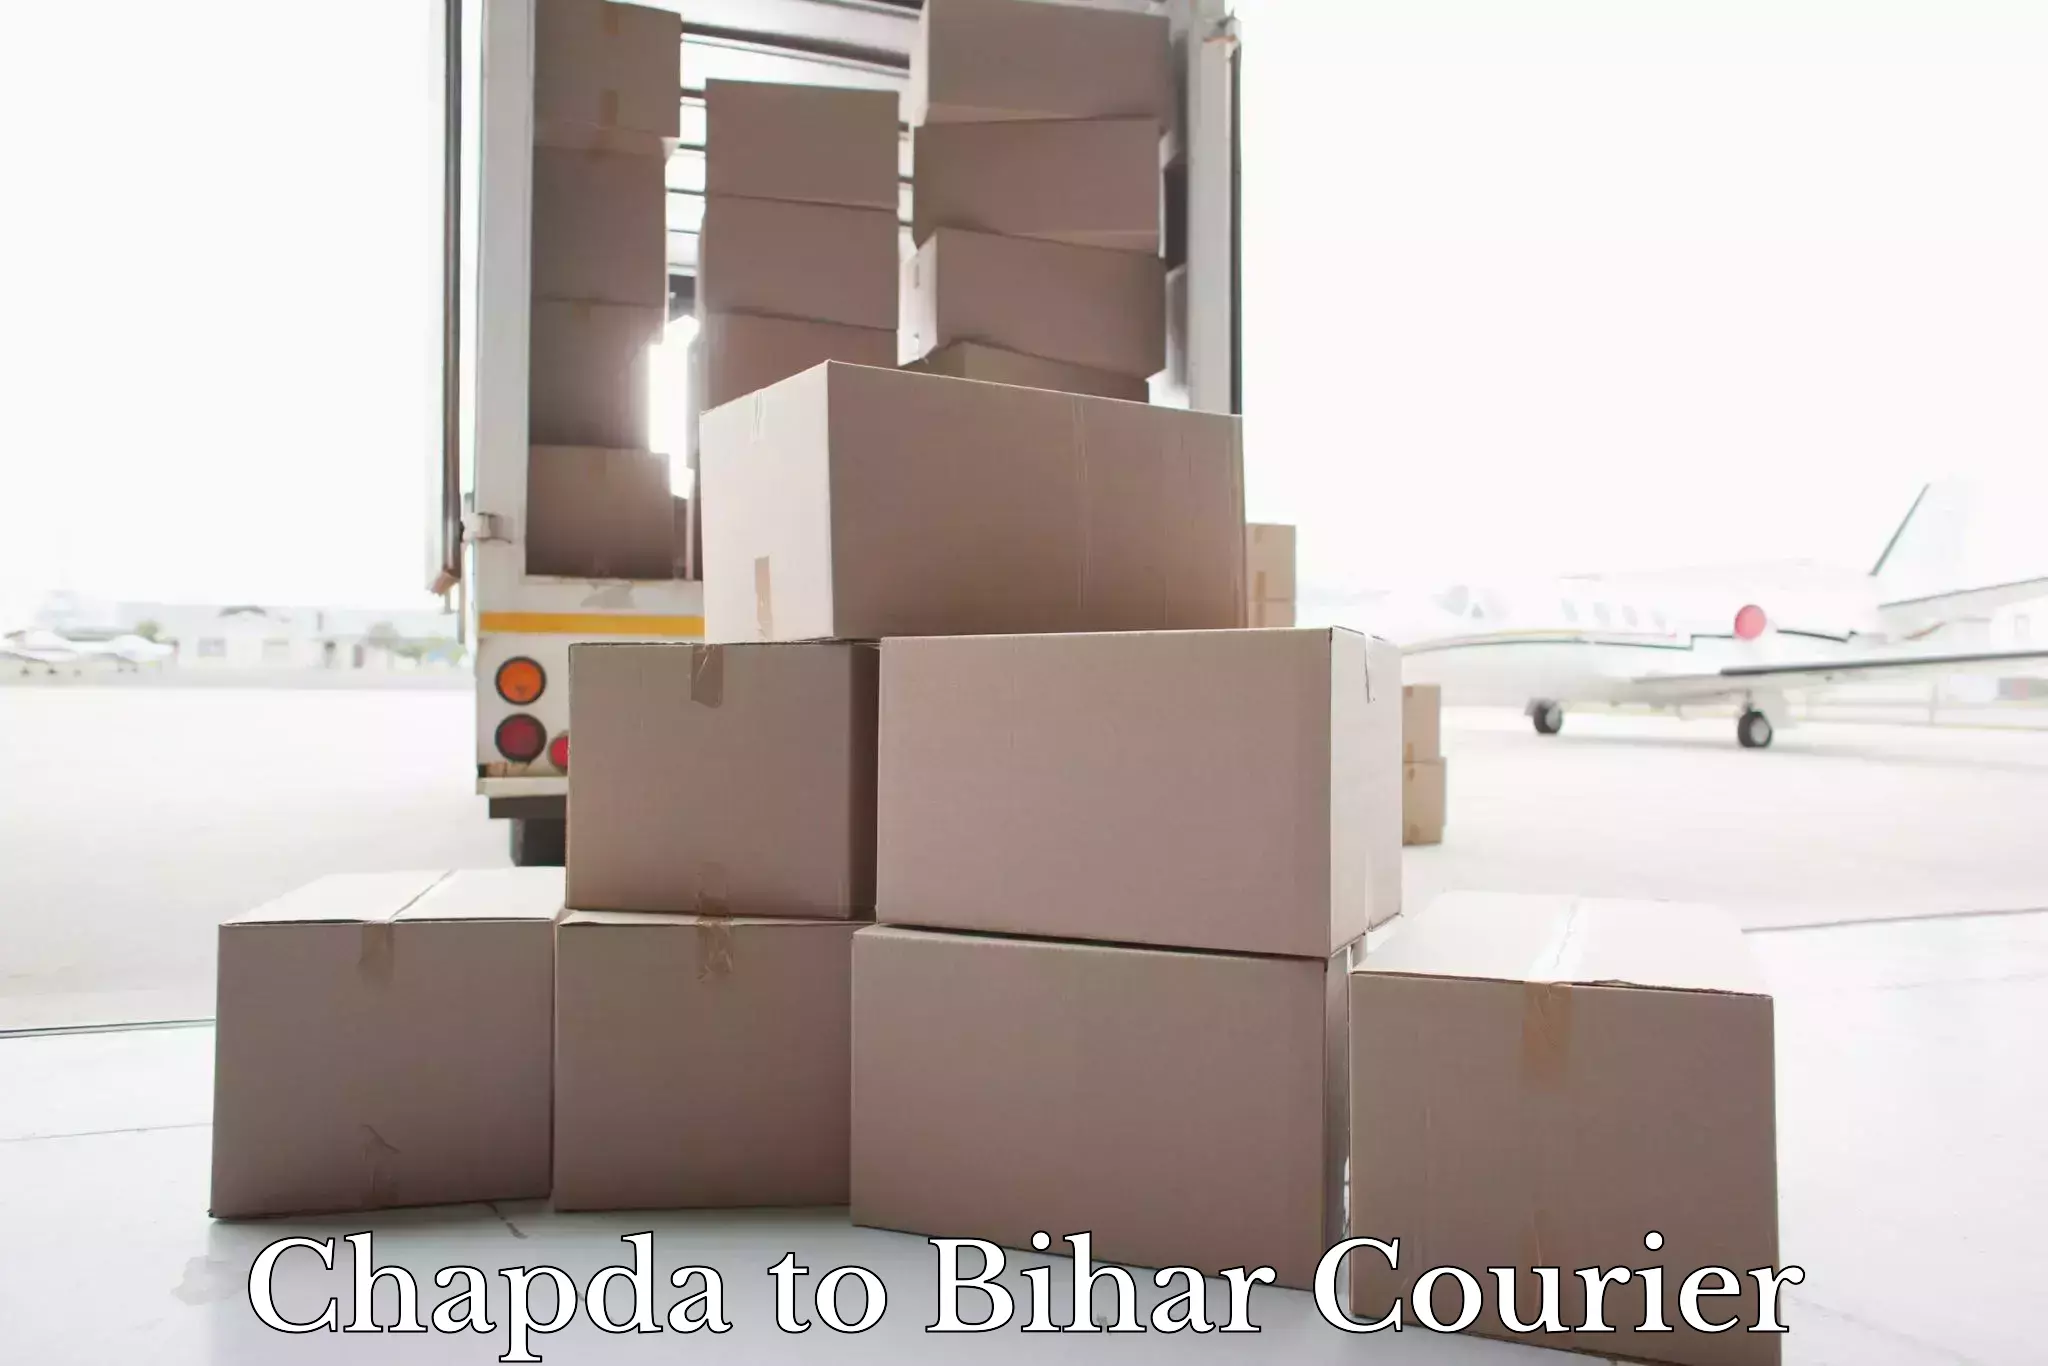 Luggage shipment specialists Chapda to Bihar